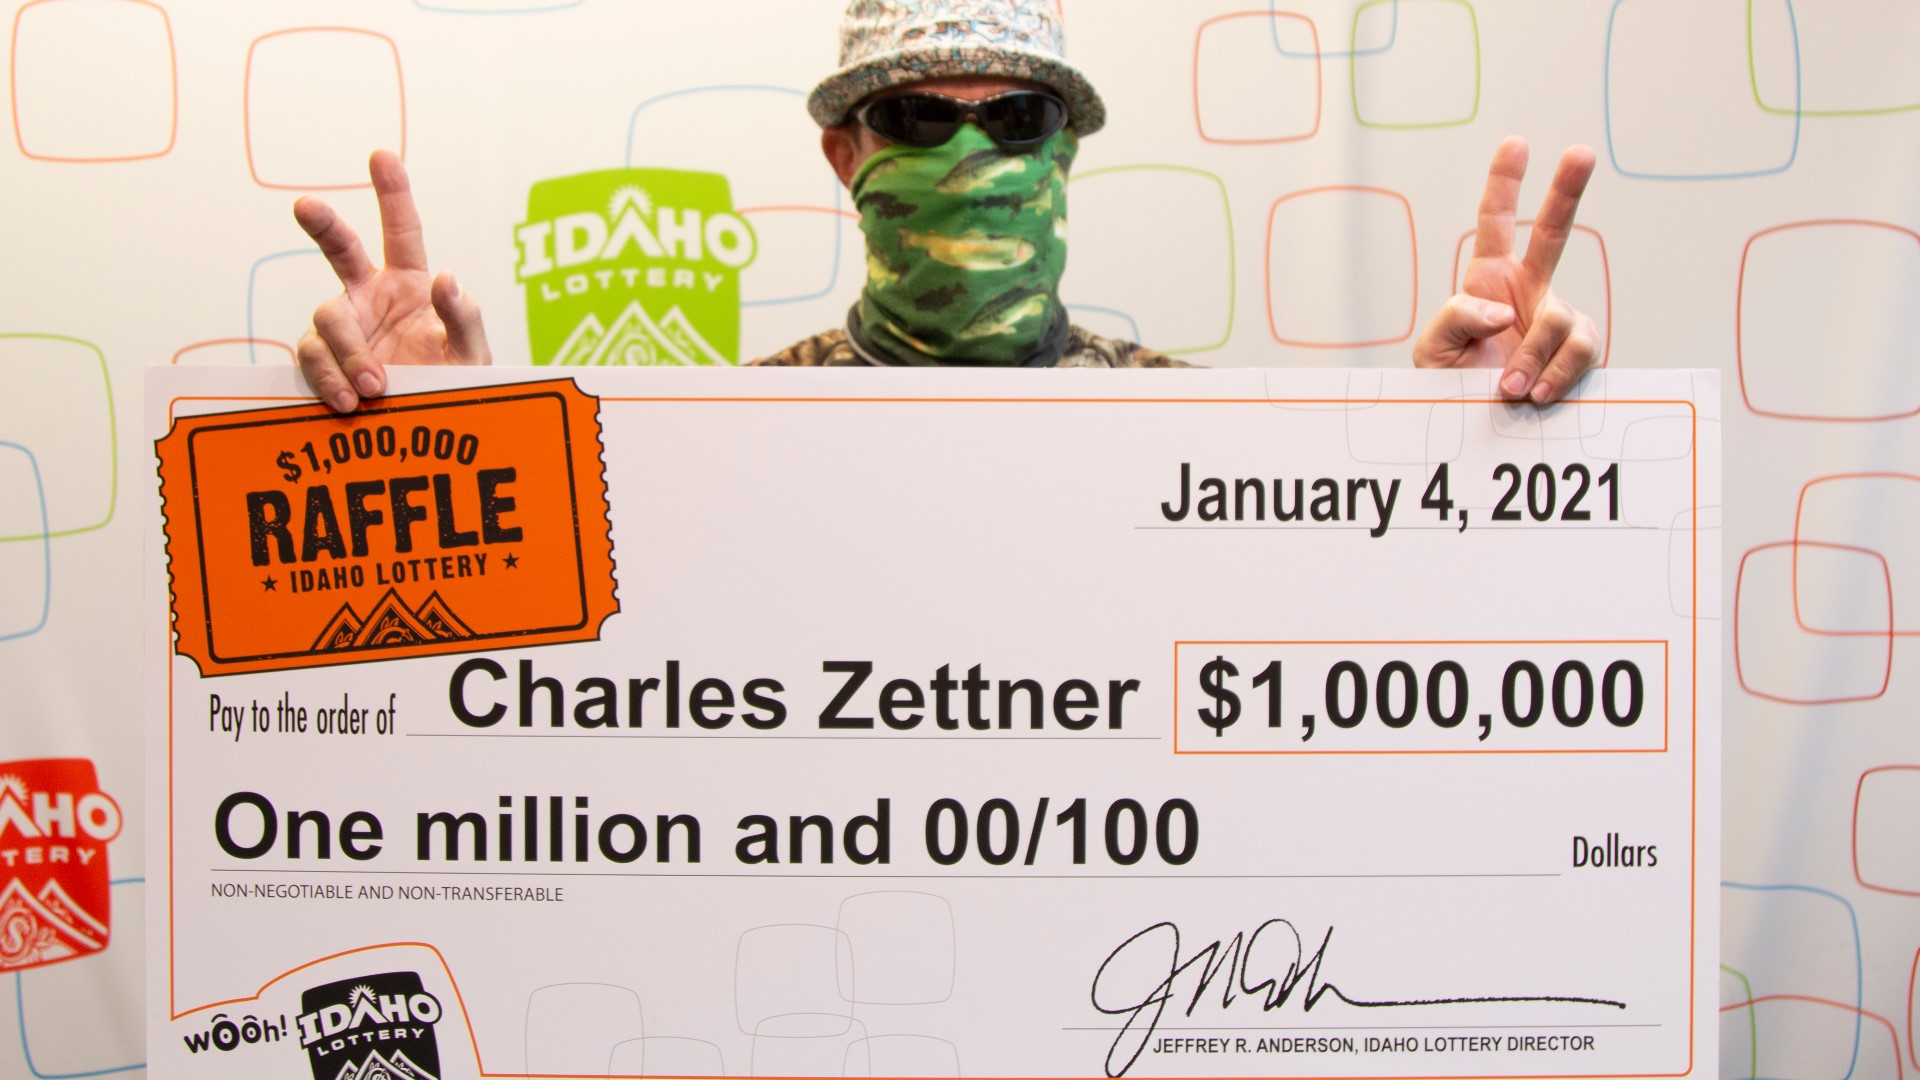 Idaho Raffle winner claims 1 million prize